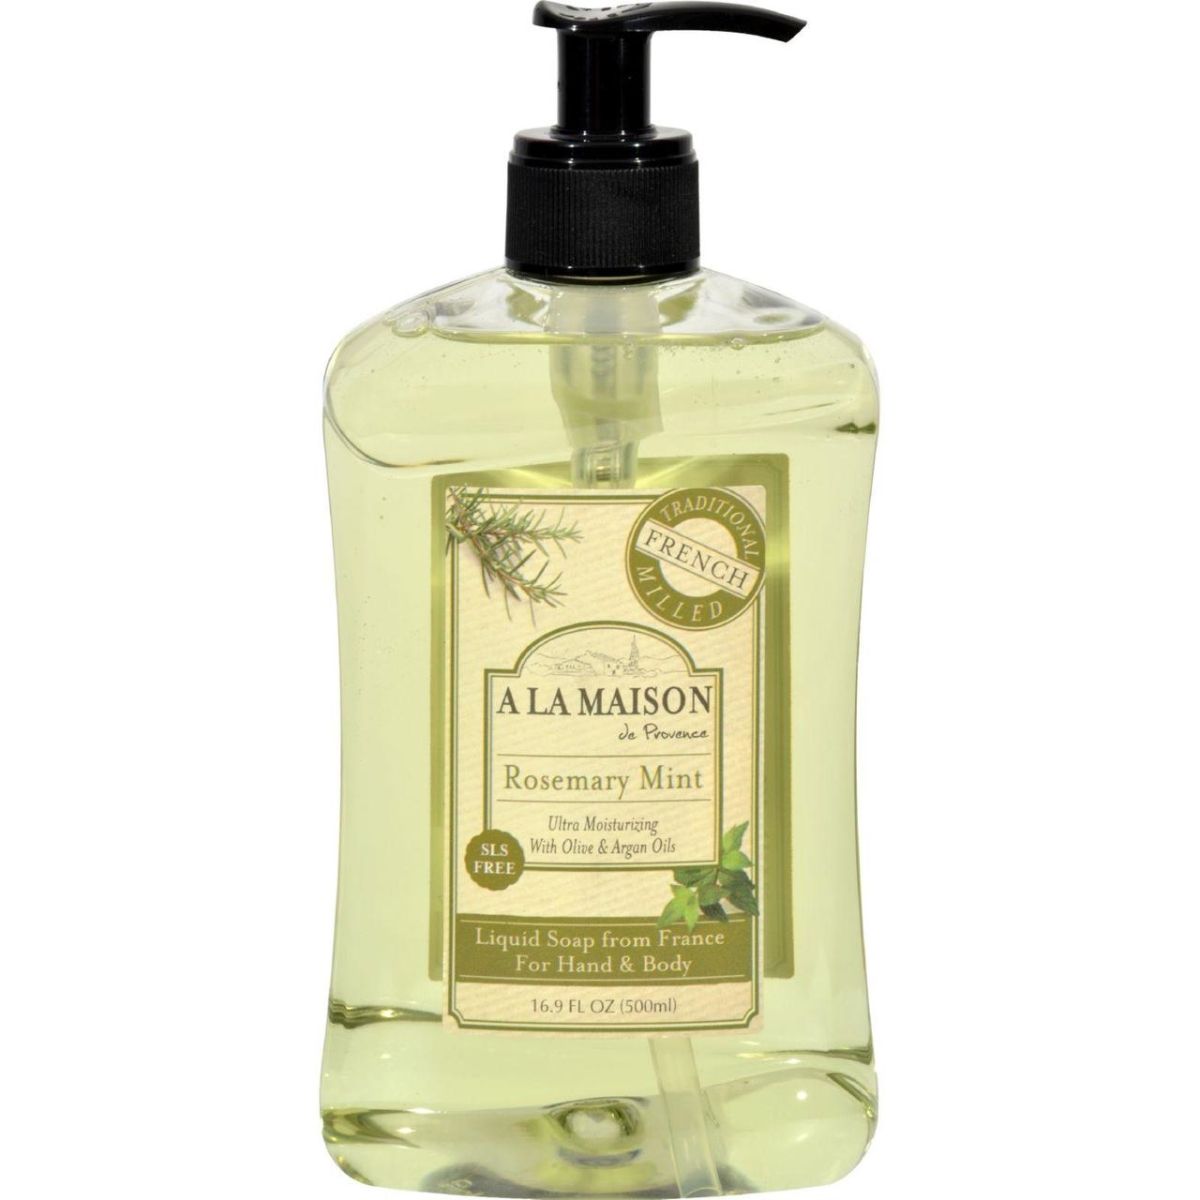 Hg0702878 16.9 Fl Oz French Liquid Soap, Rosemary Mint